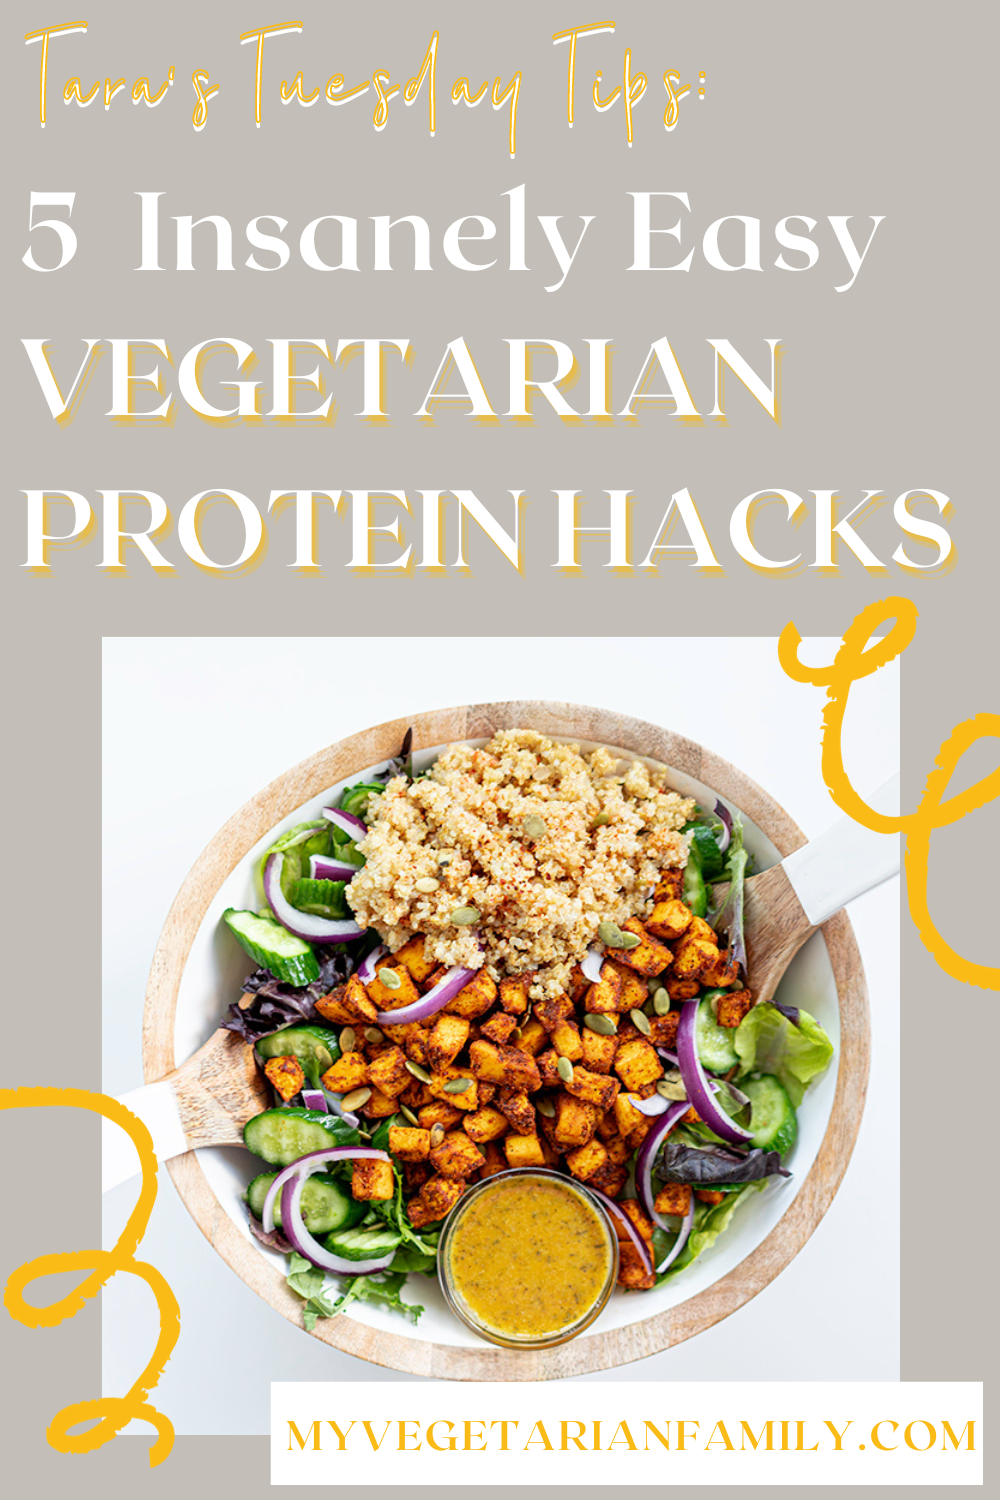 Vegetarian Protein Hacks | My Vegetarian Family | Tara's Tuesday Tips #vegetarianproteinhacks